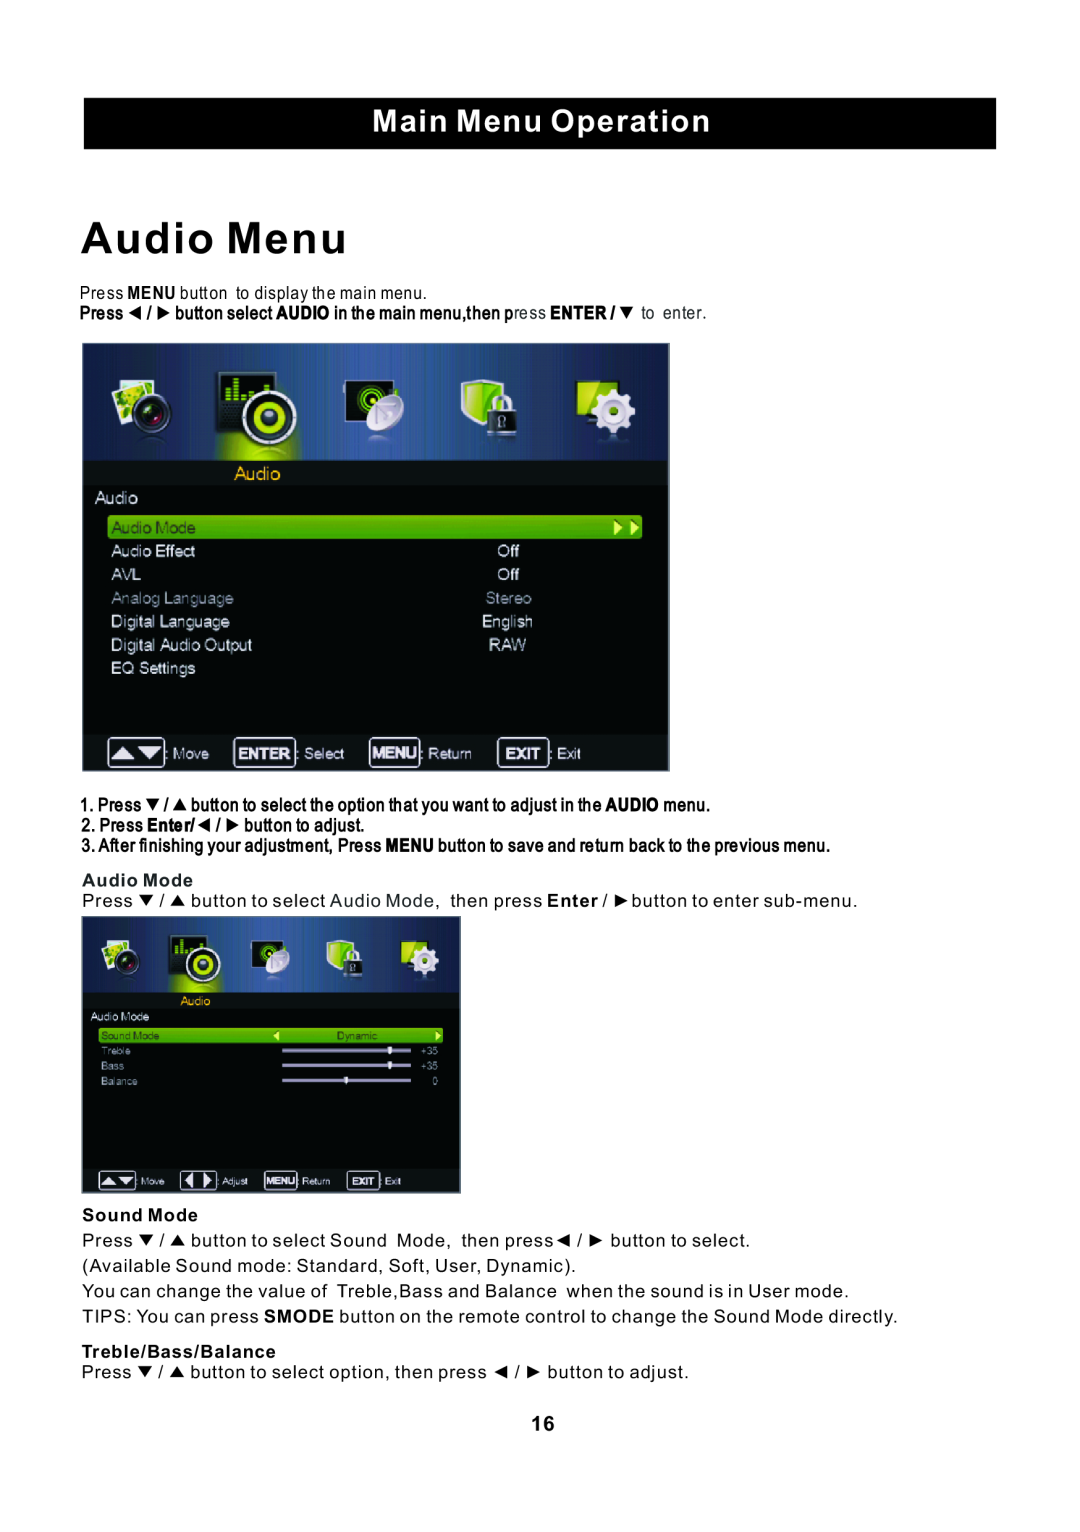 ProScan RLED2445A-B instruction manual Audio Menu, Main Menu Operation 